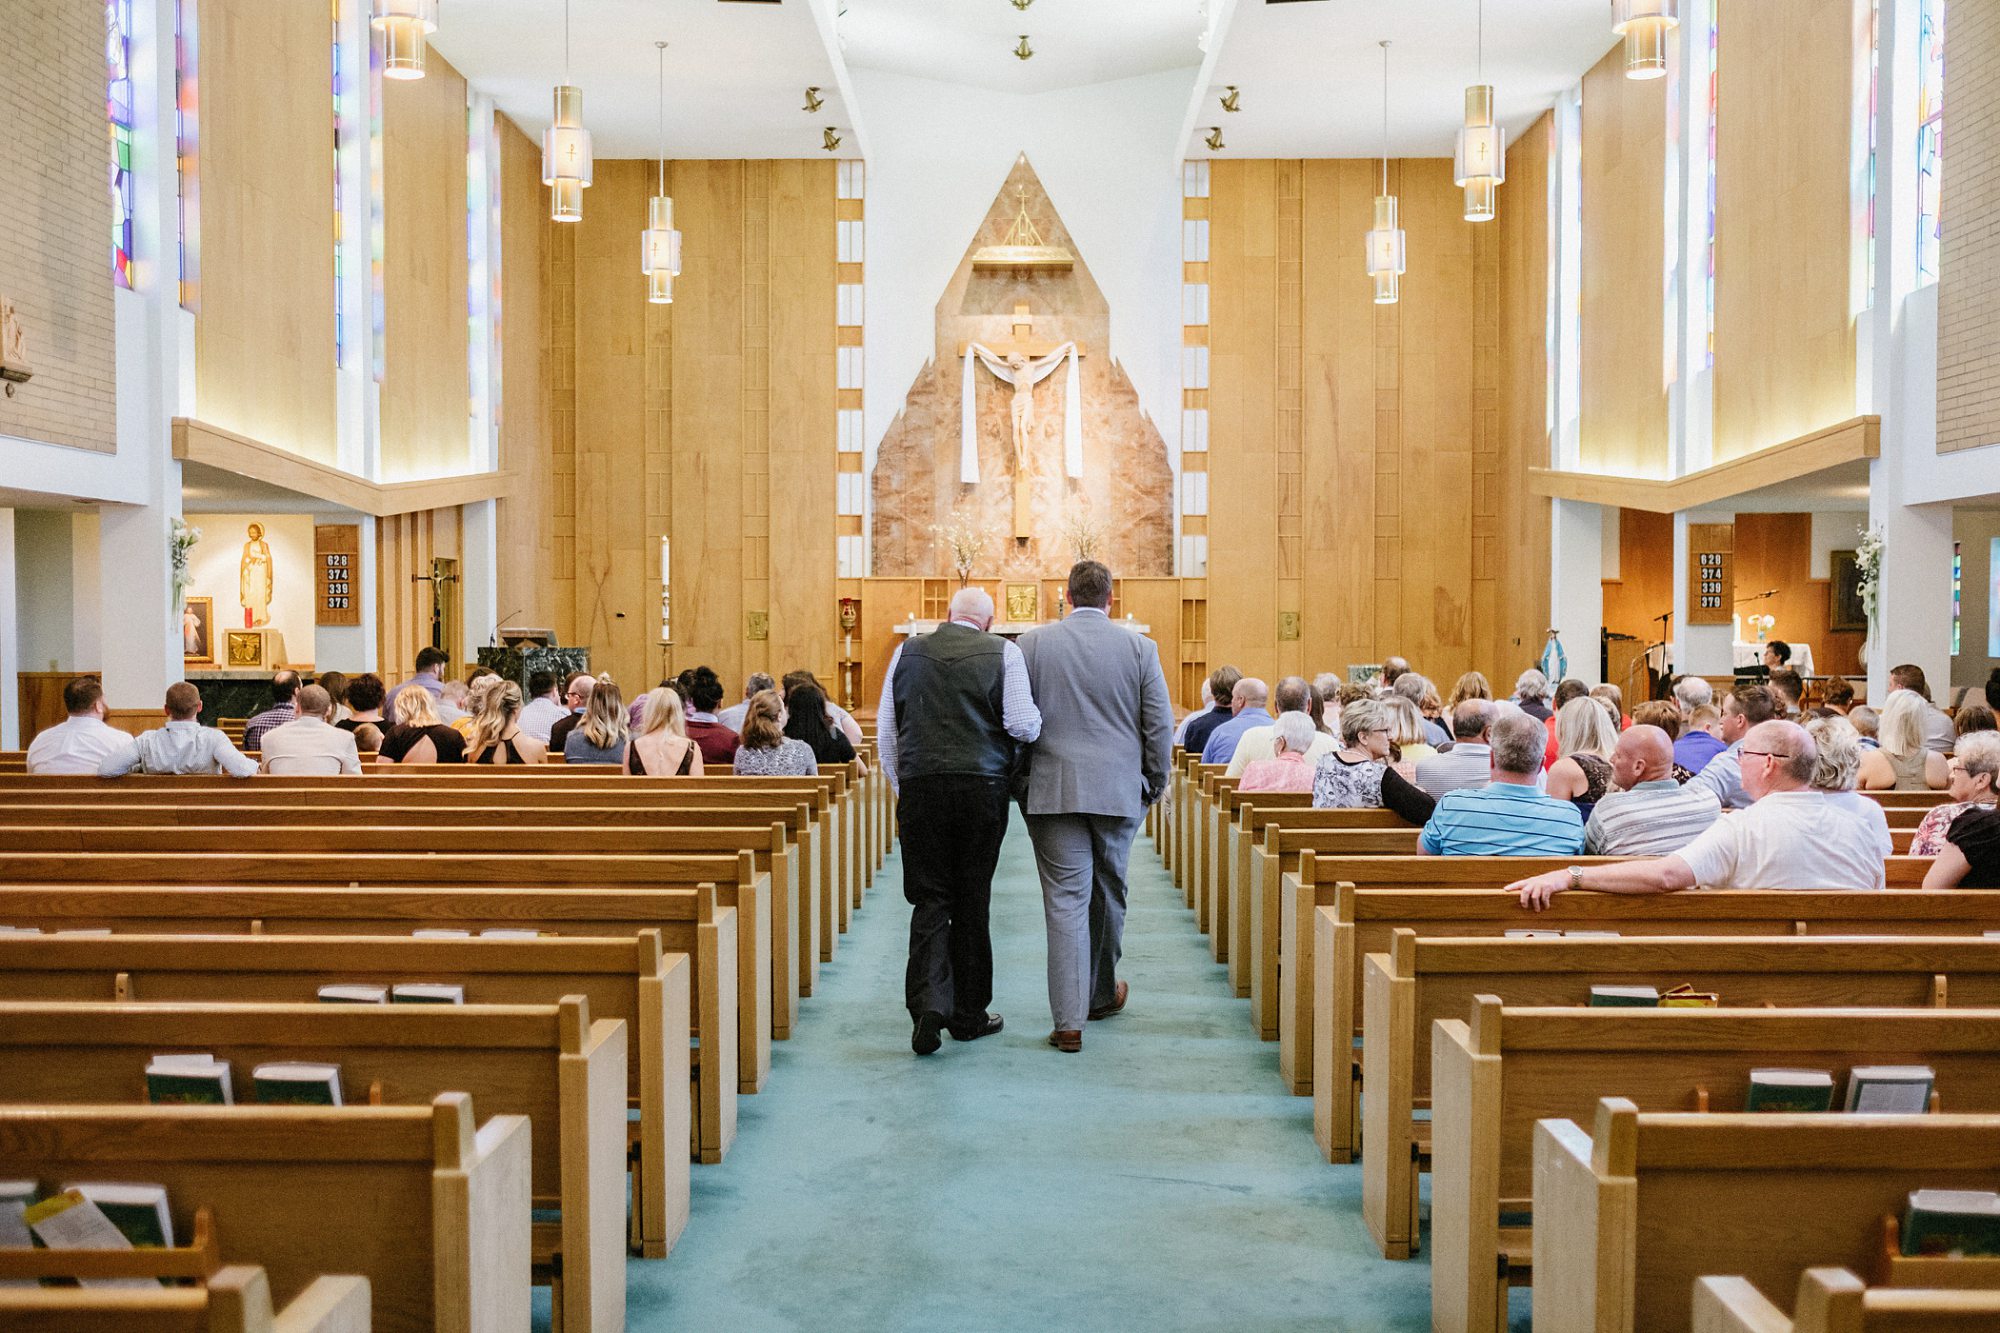 sanctuary, church, wedding guests